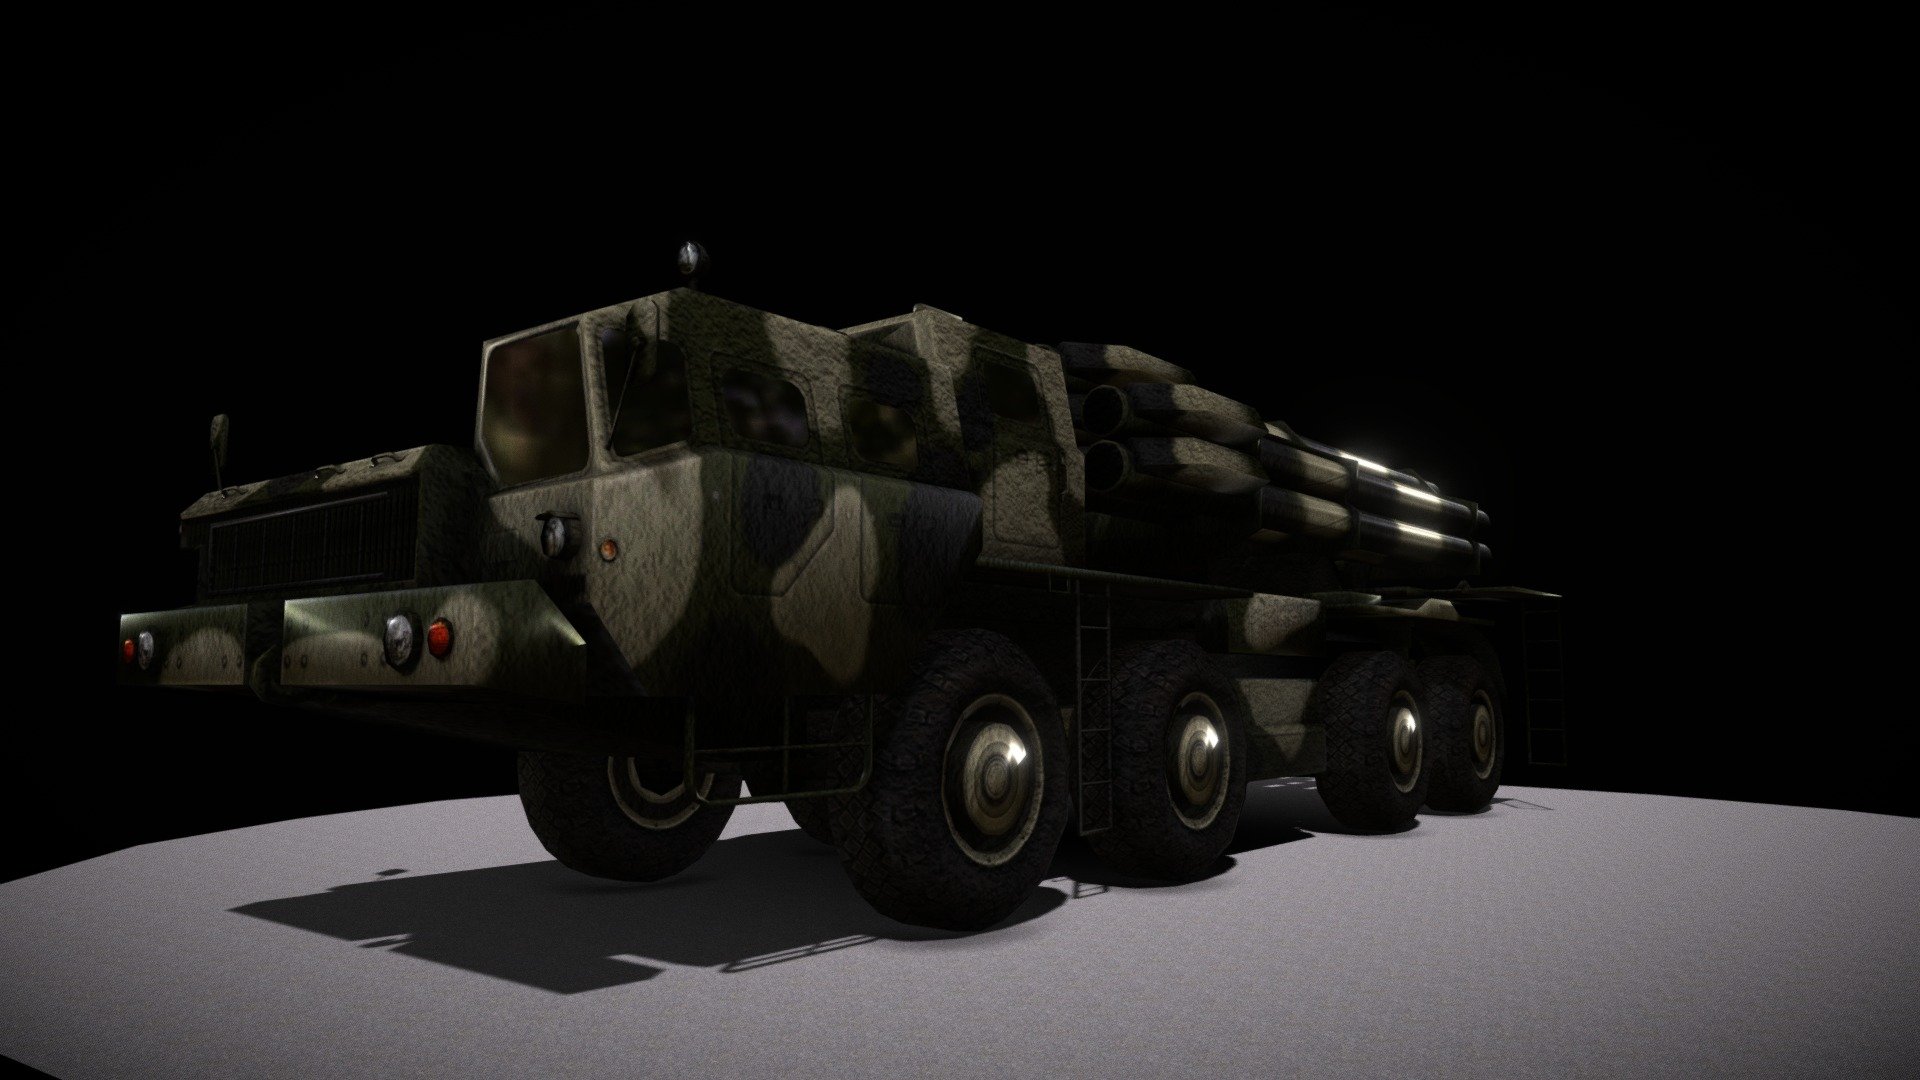 BM-30 SMERCH 8X8 (LOW POLY) - Download Free 3D model by lm9241221 3d model